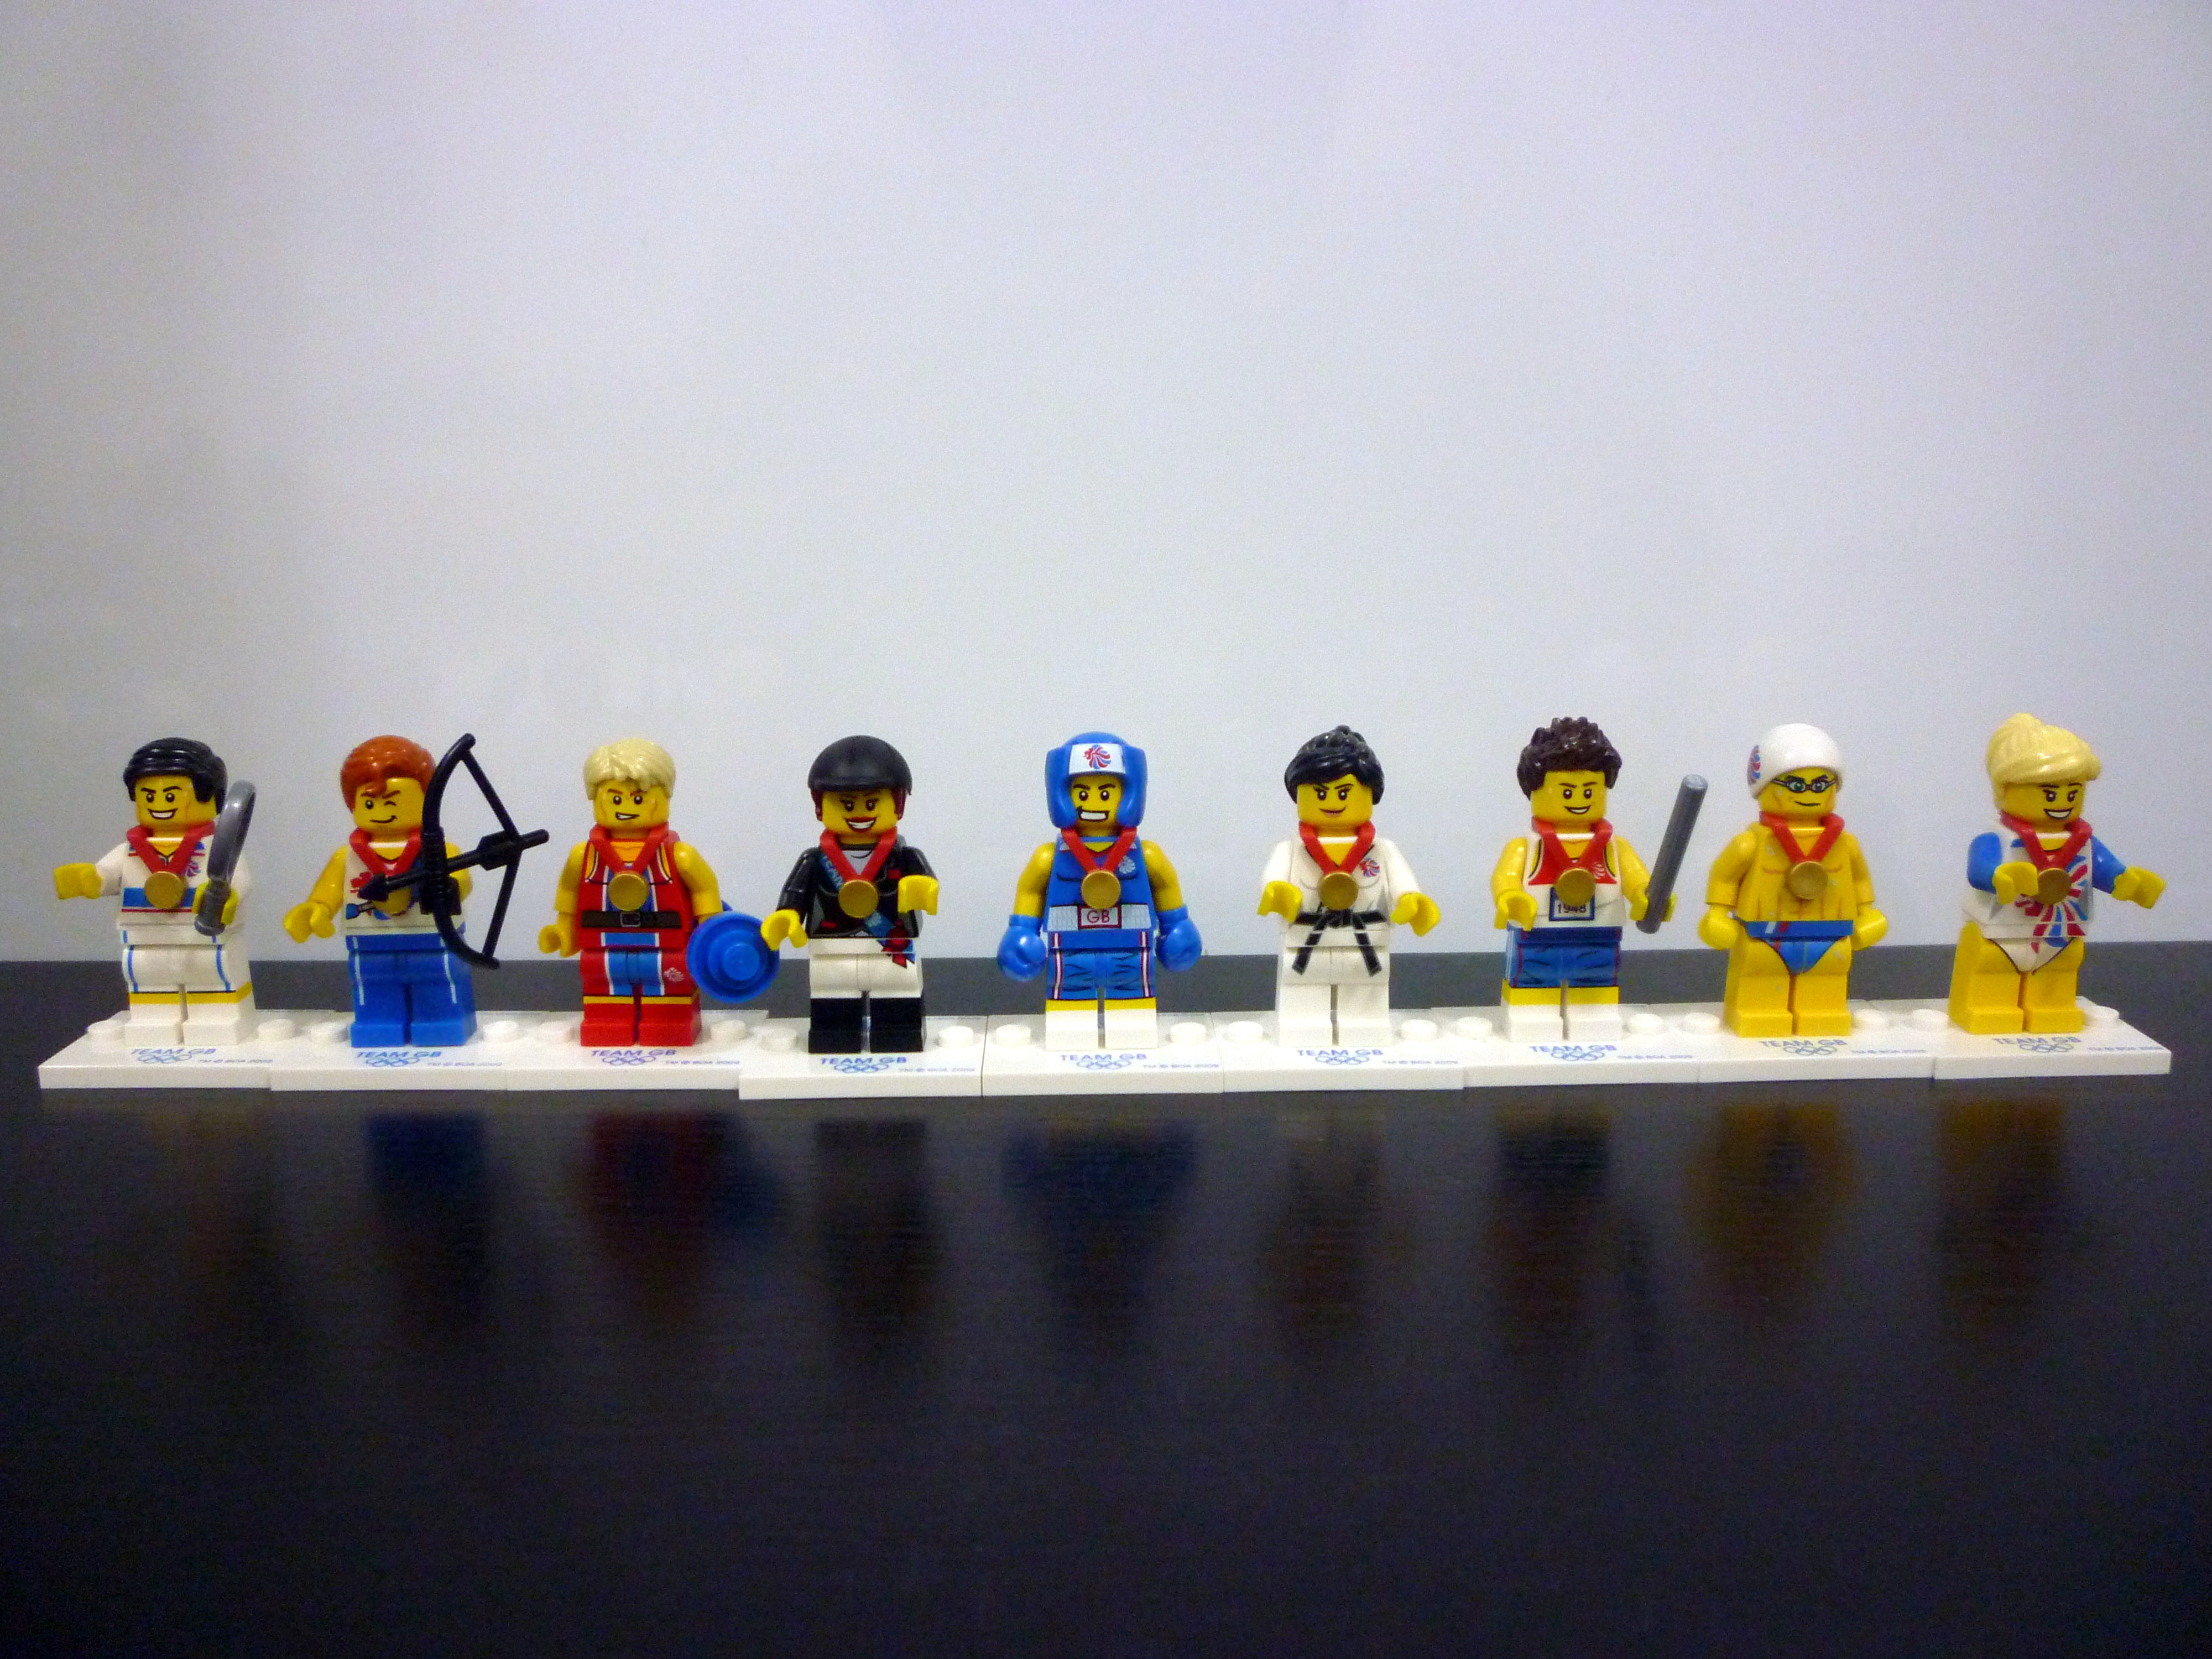 Lego Team GB Minifigures Review - Jays Brick Blog